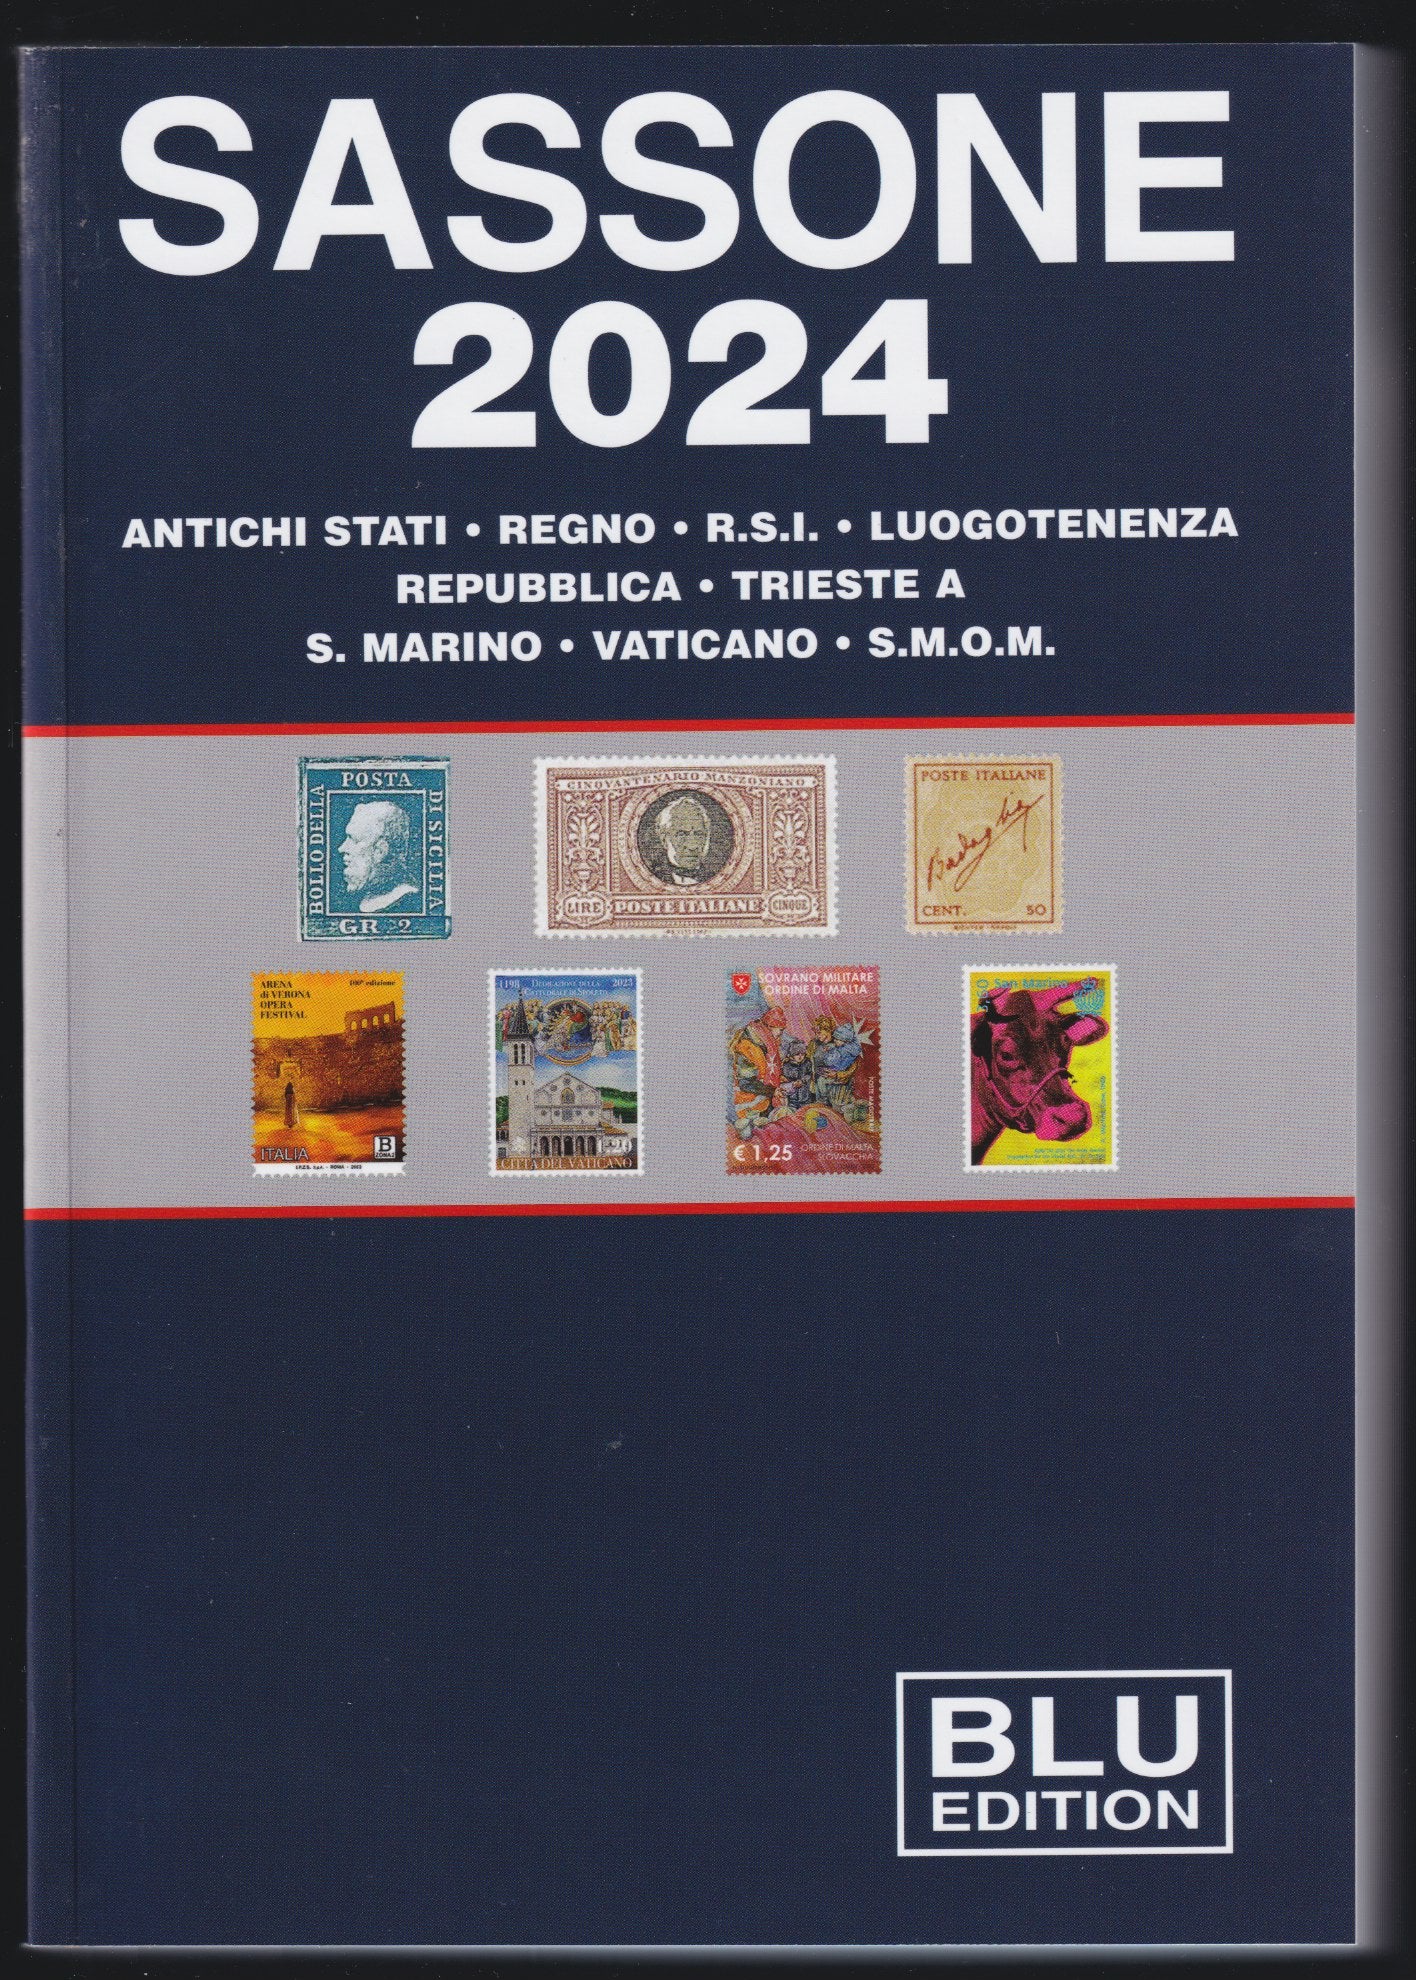 SASSONE BLU CATALOG 2024 (Italian area, summary)